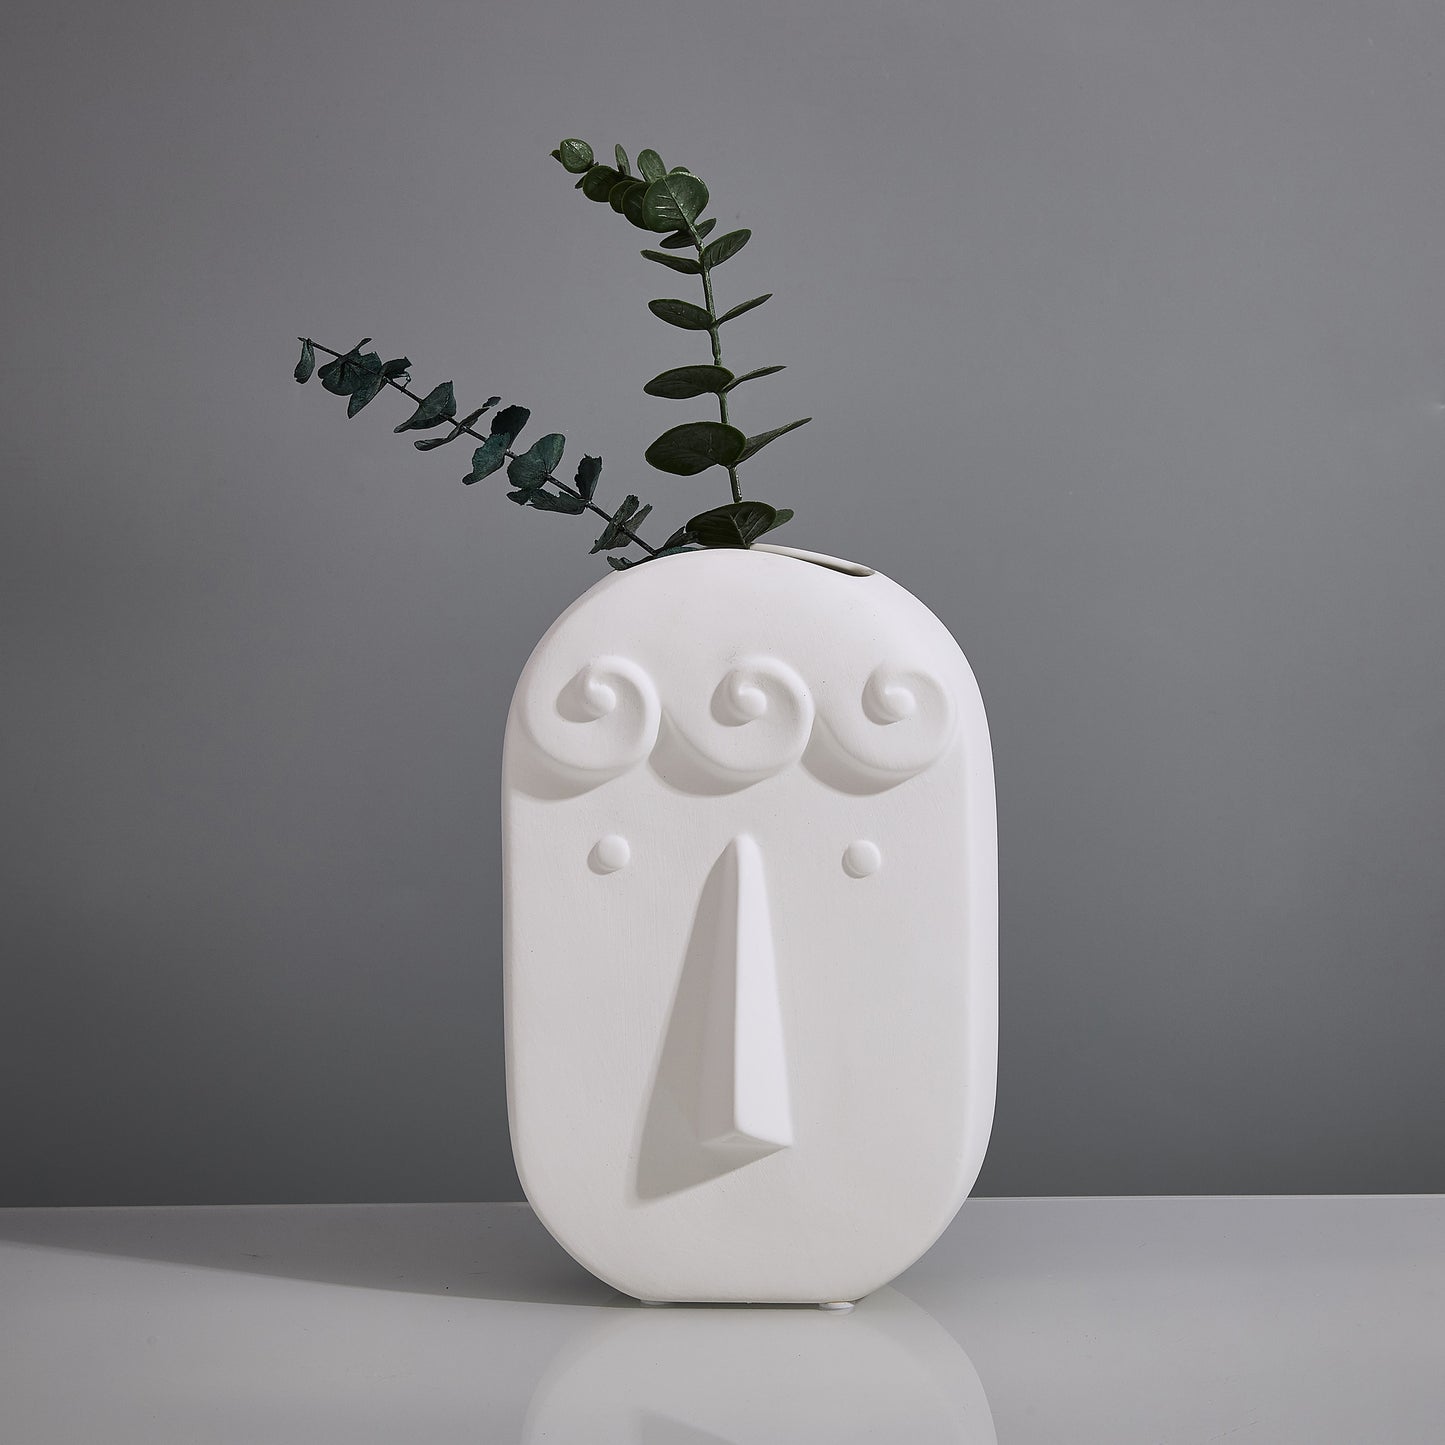 MIAJO Face Vase Set of 3, Cute Room Decor Aesthetic, Unique Vases for Flowers, White Ceramic Vase Funky Decor